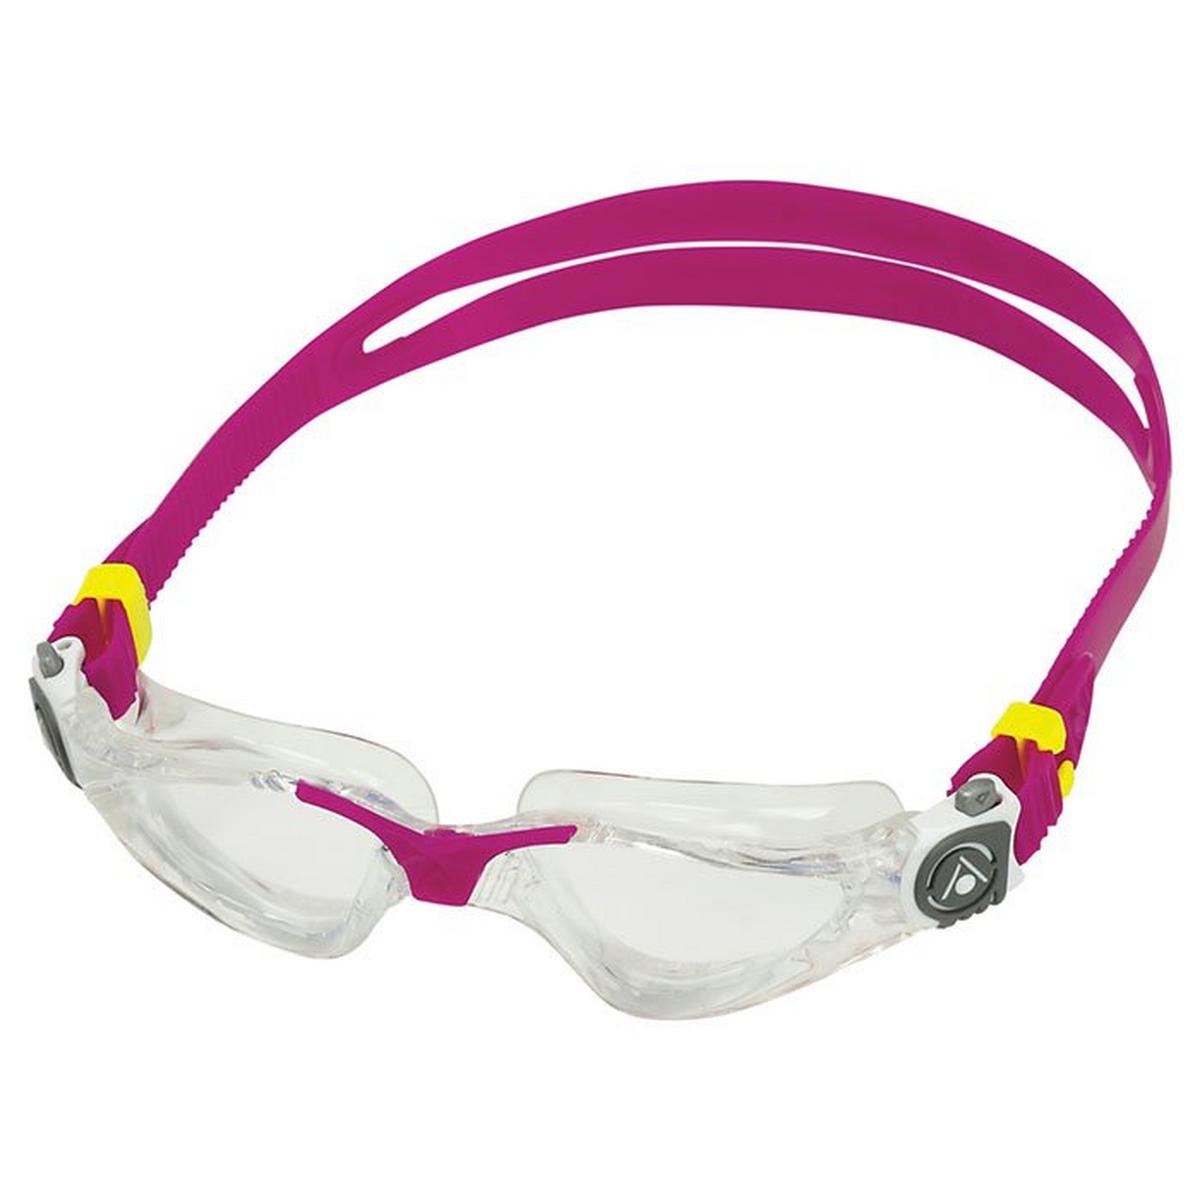 Kayenne Compact Fit Clear Swim Goggle